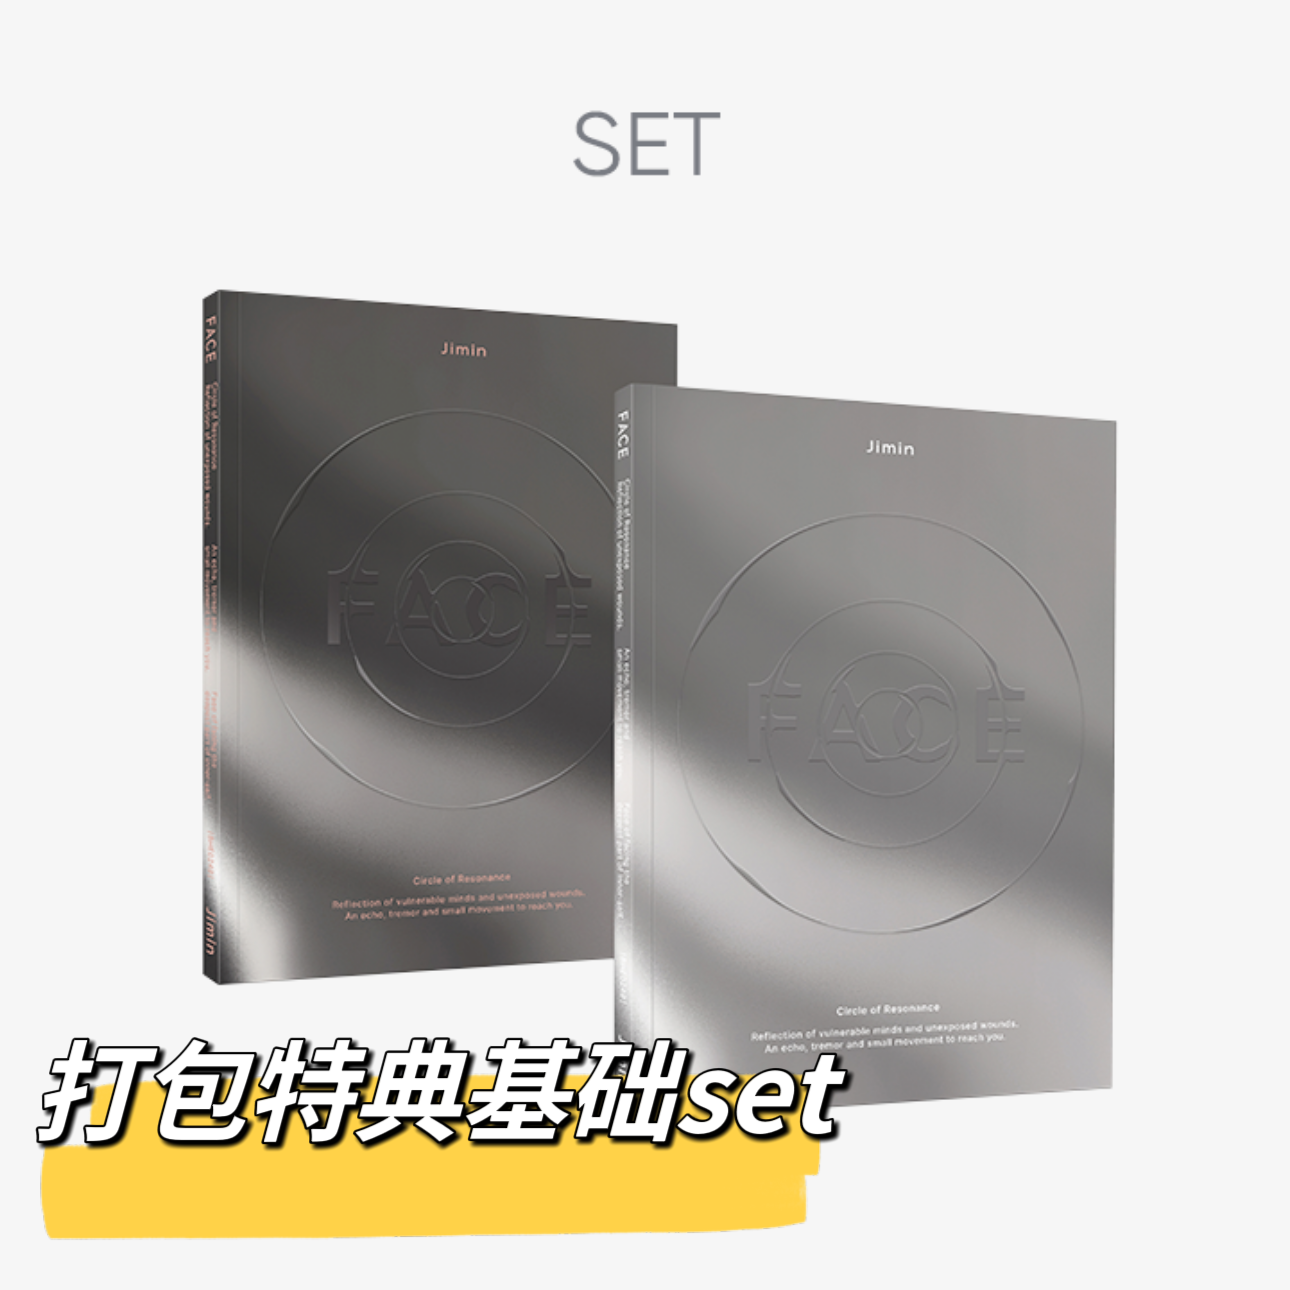 [全款 基础特典专] [Ktown4u Special Gift] [2CD 套装] Jimin (BTS) - [FACE] (Invisible Face + Undefinable Face)_朴智旻散粉